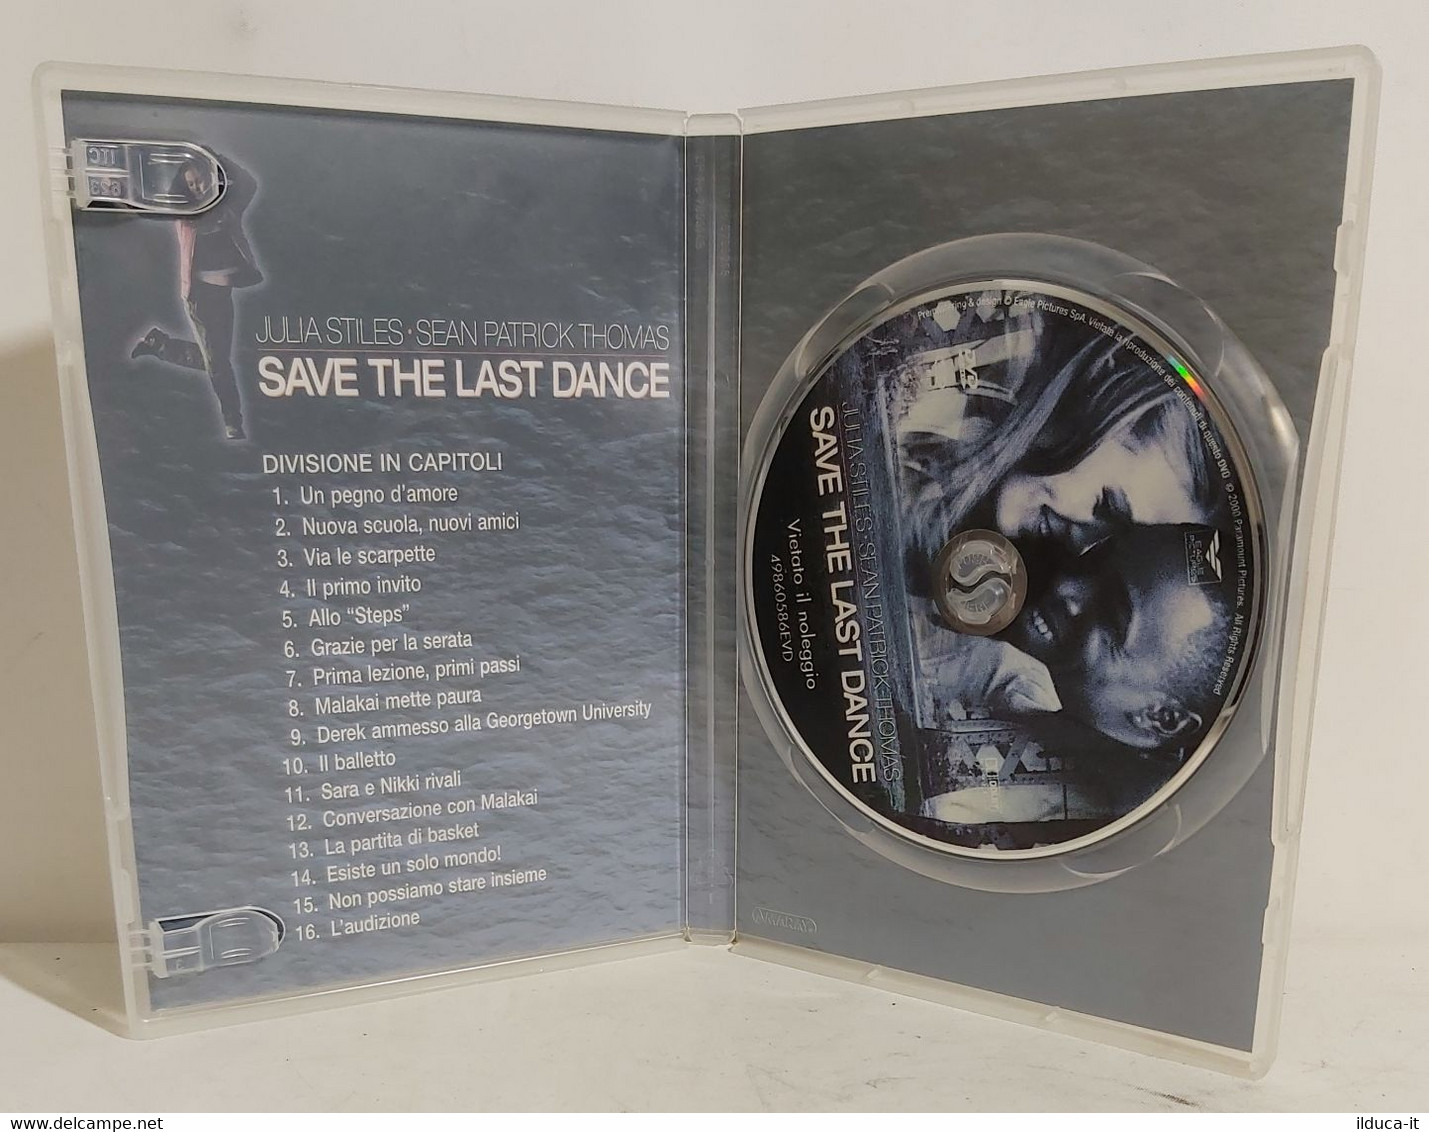 I101492 DVD - Save The Last Dance - Julia Stiles Sean Patrick Thomas - Lovestorys